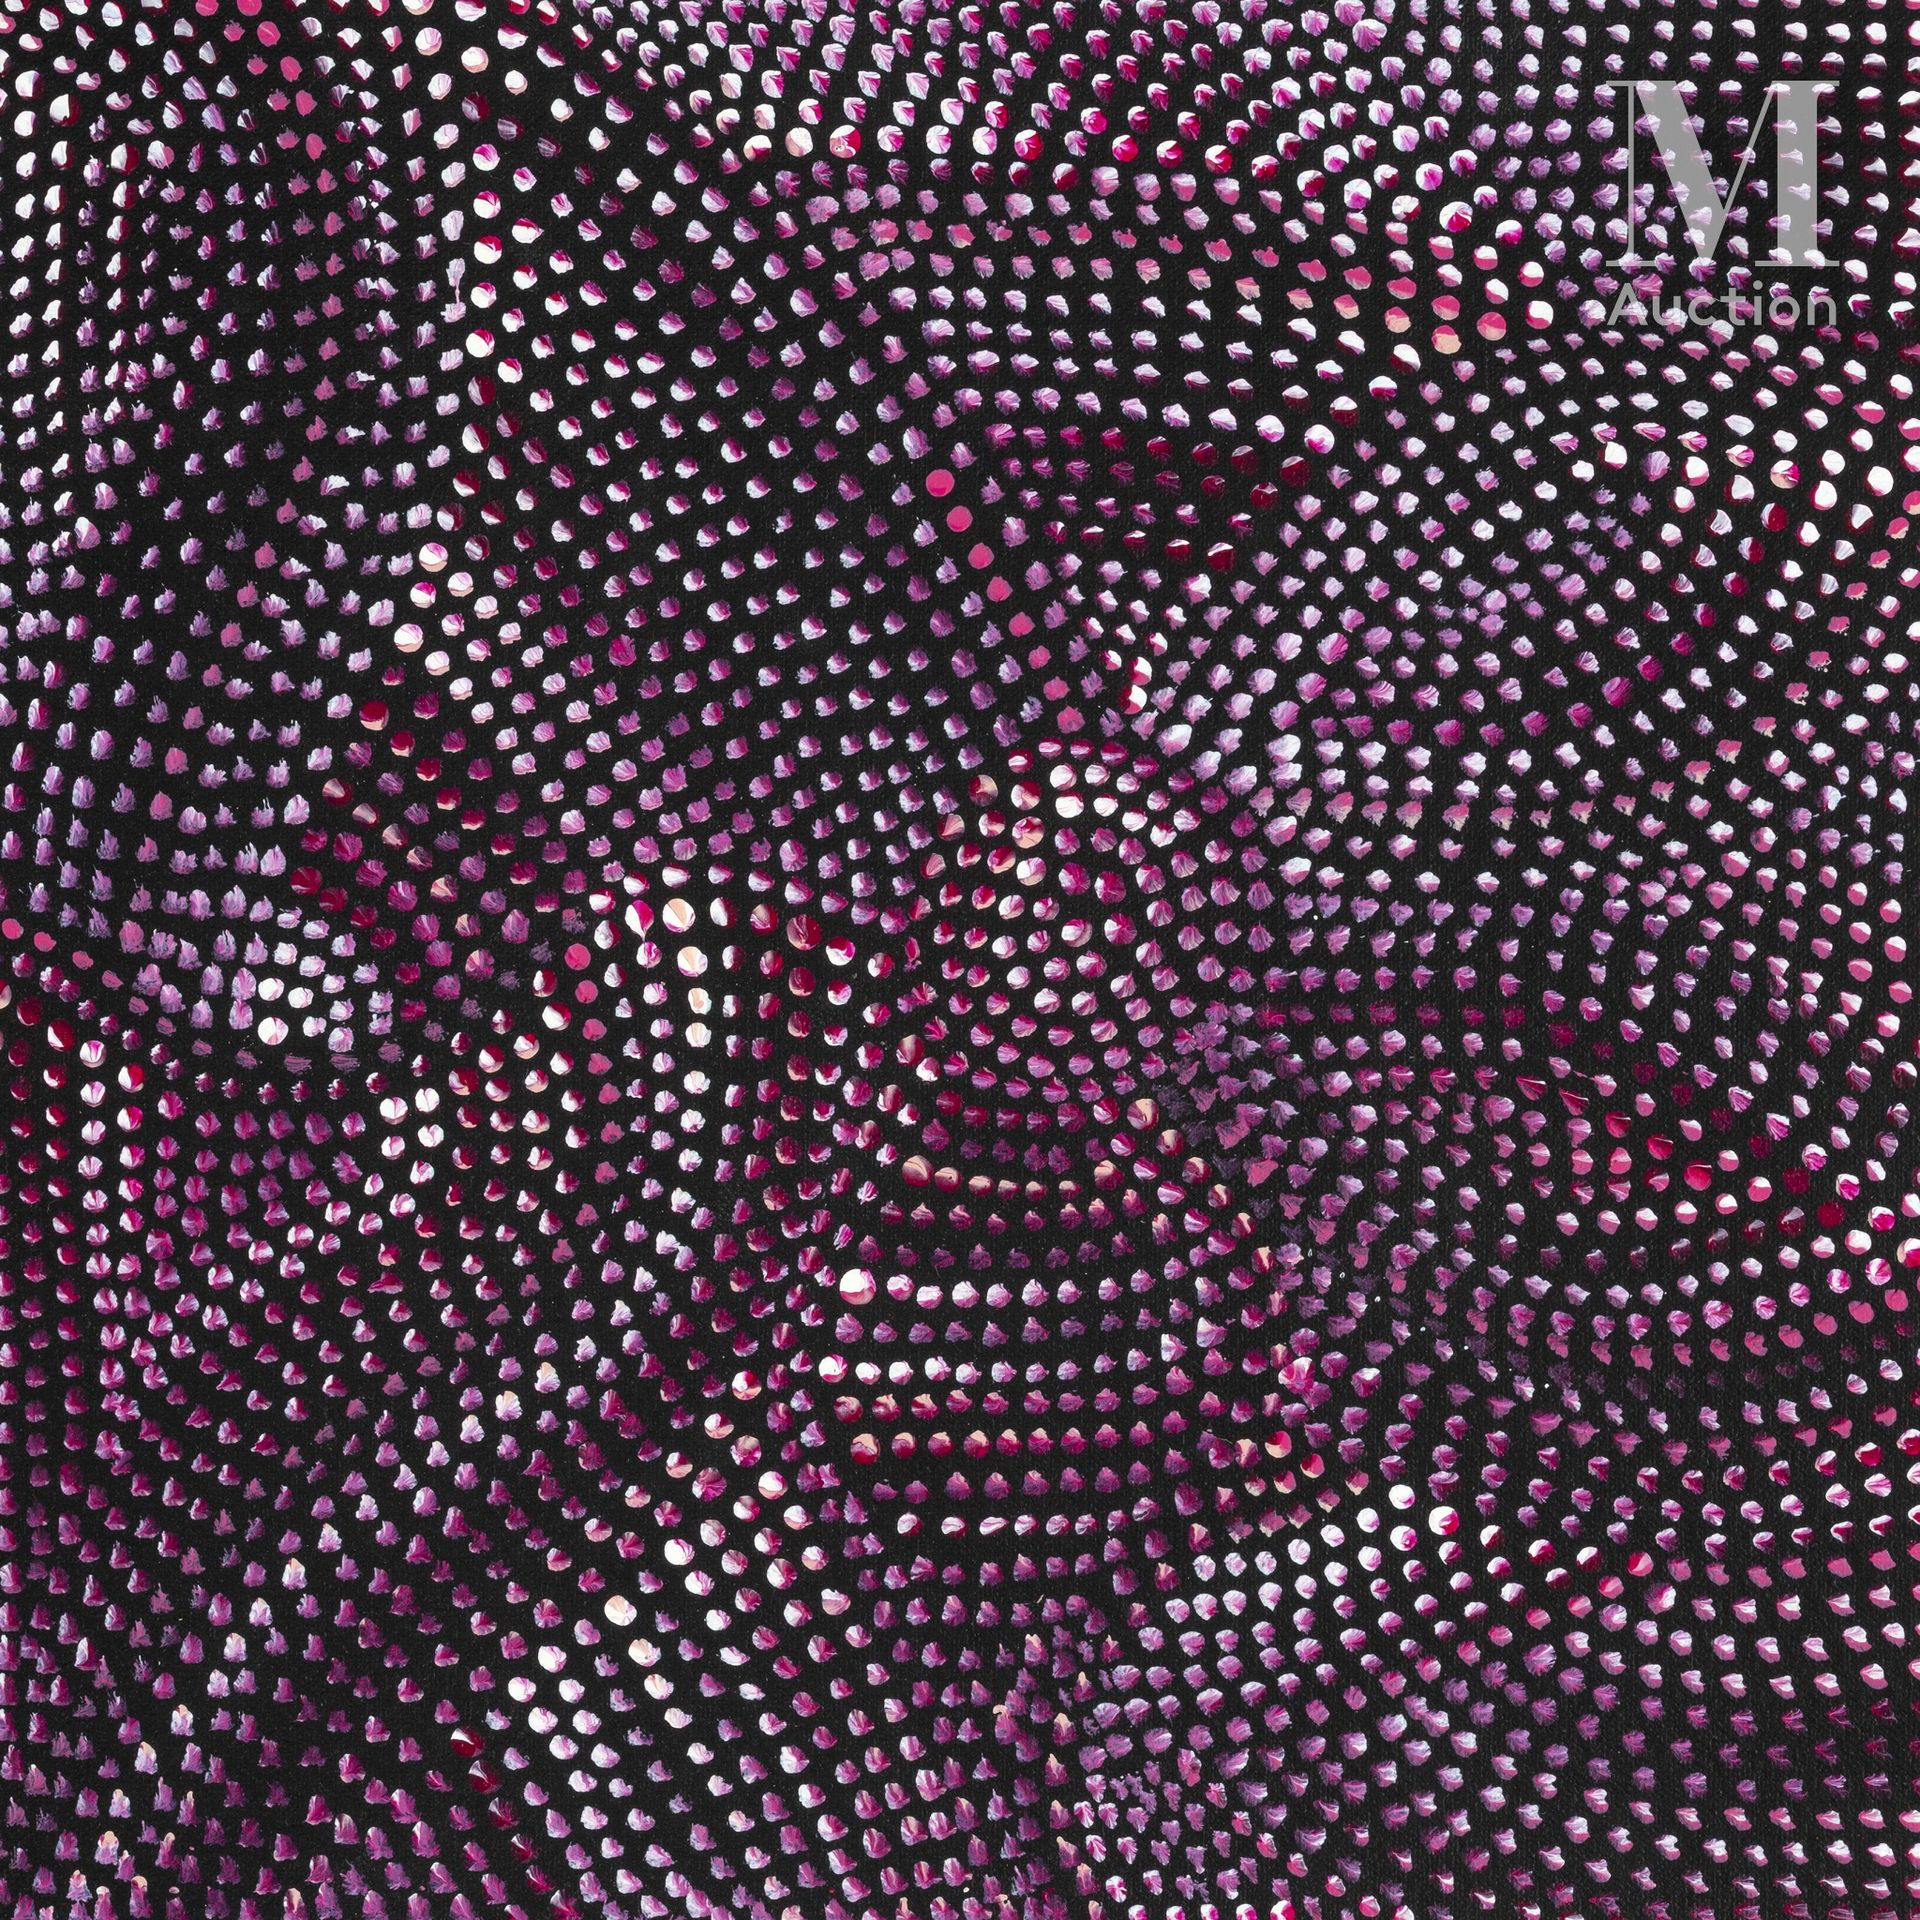 Joy Purvis Petyarre (c. 1962 - ) Wild Yam Seed, 2021

Acrylique sur toile - 30 x&hellip;